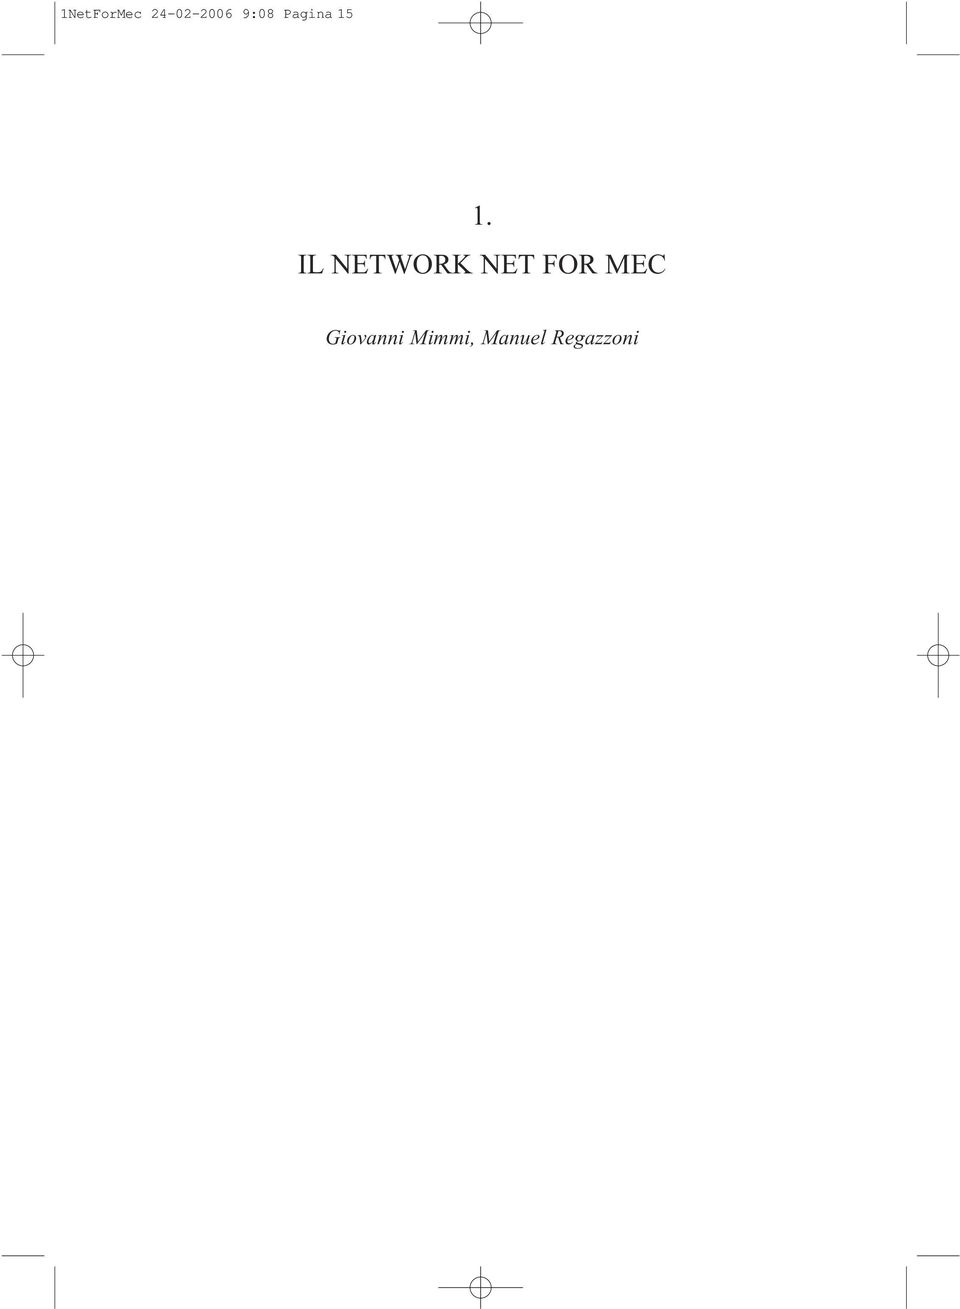 IL NETWORK NET FOR MEC